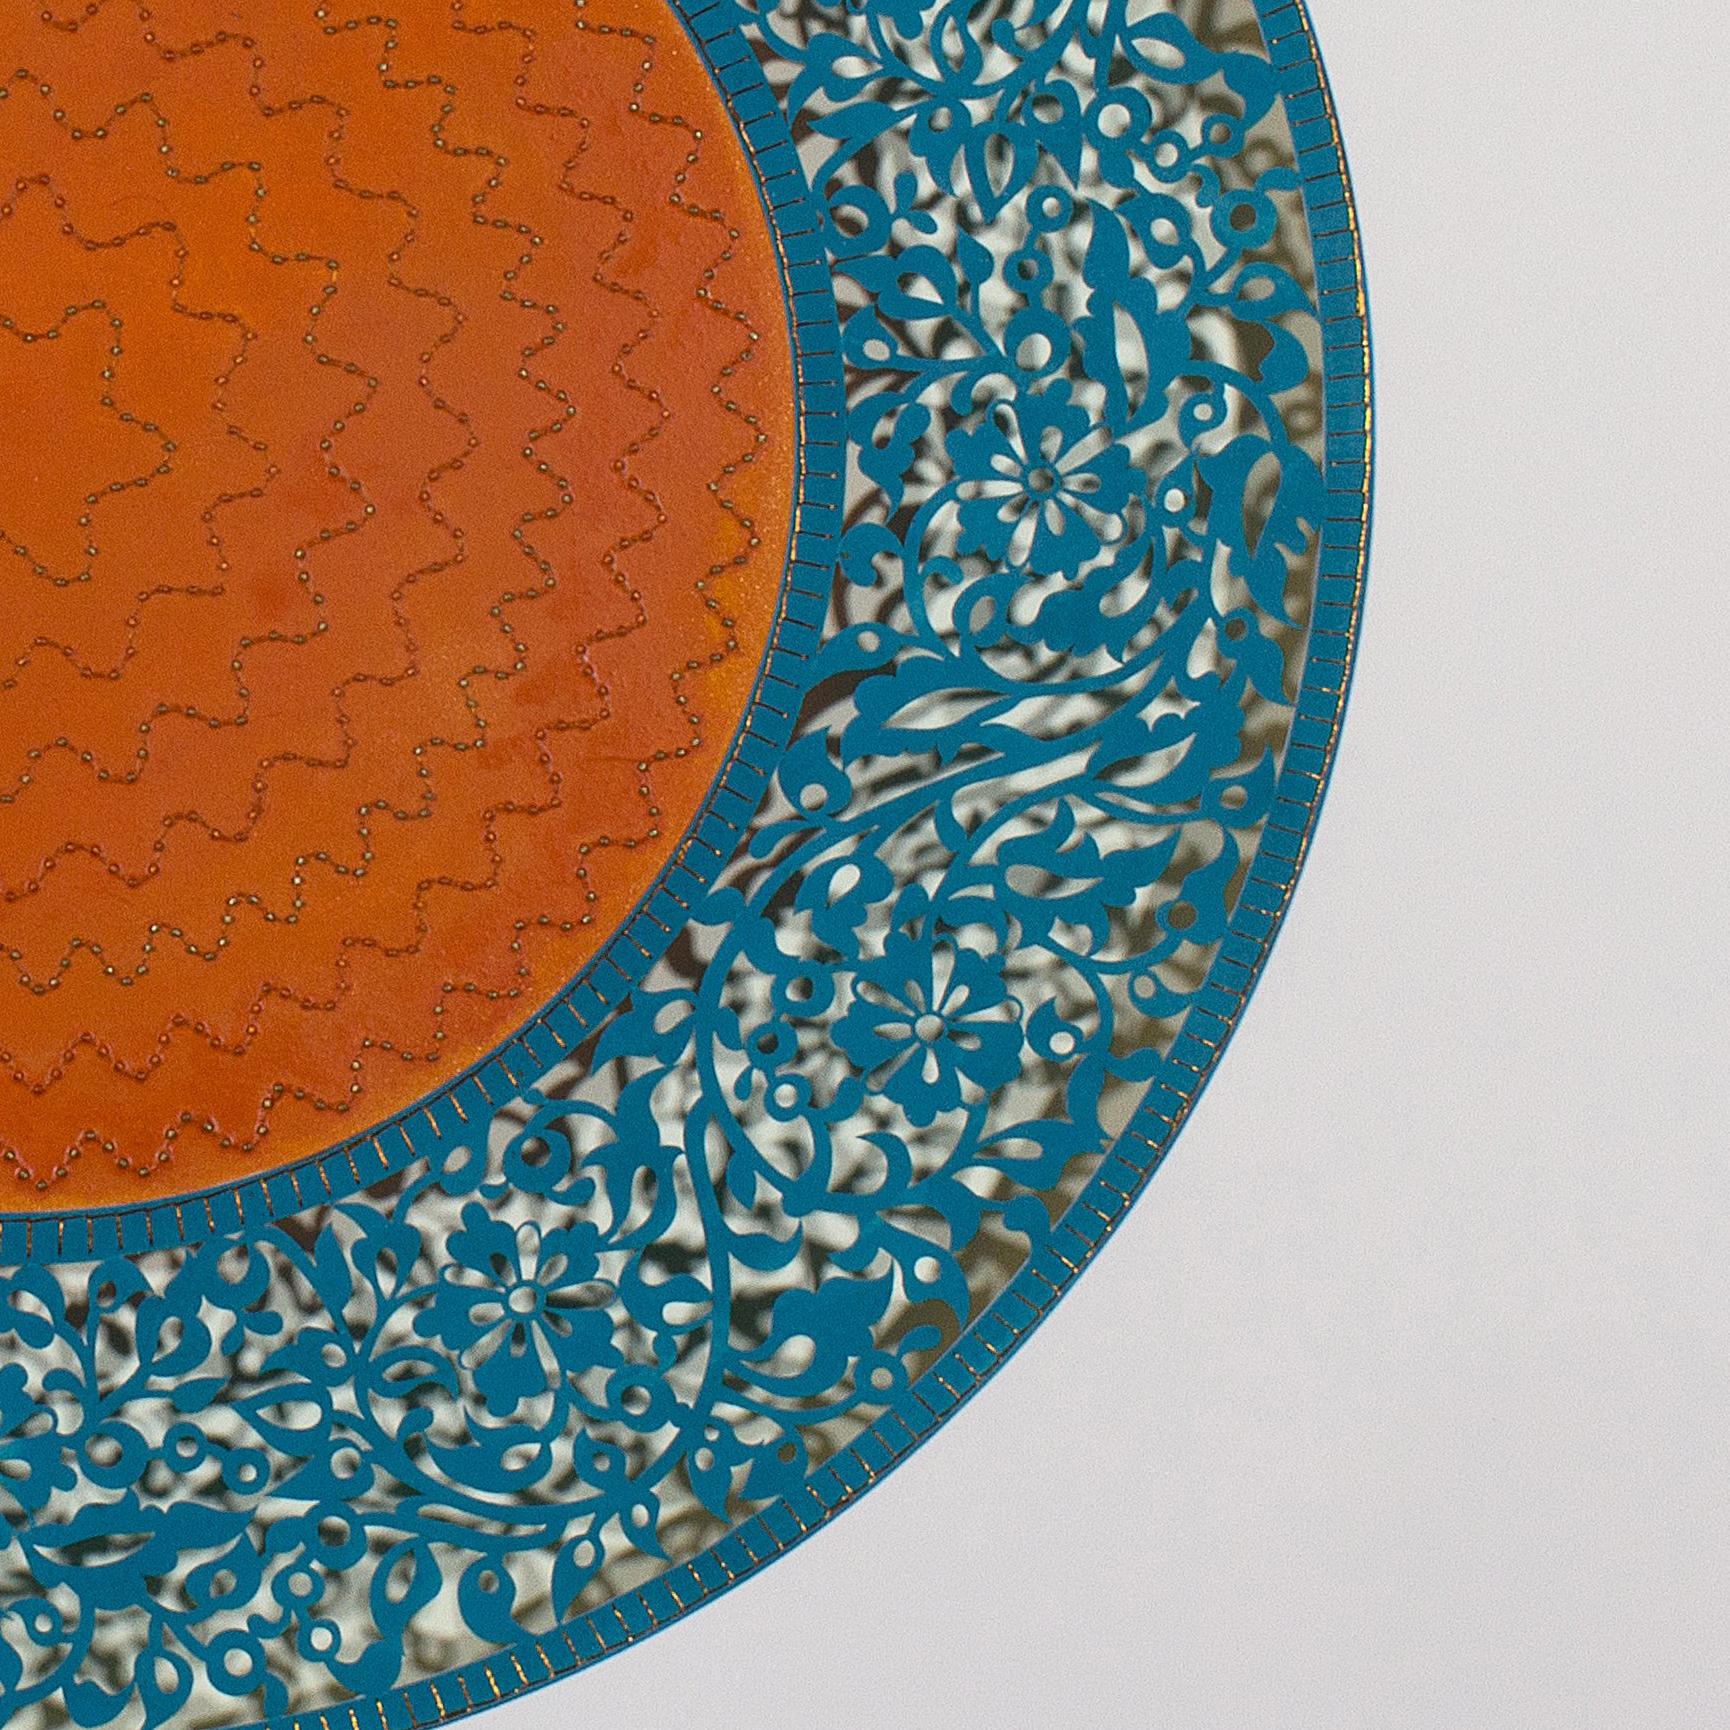 Flowers (Blue and Orange Circle) - Abstract Geometric Painting by Anila Quayyum Agha